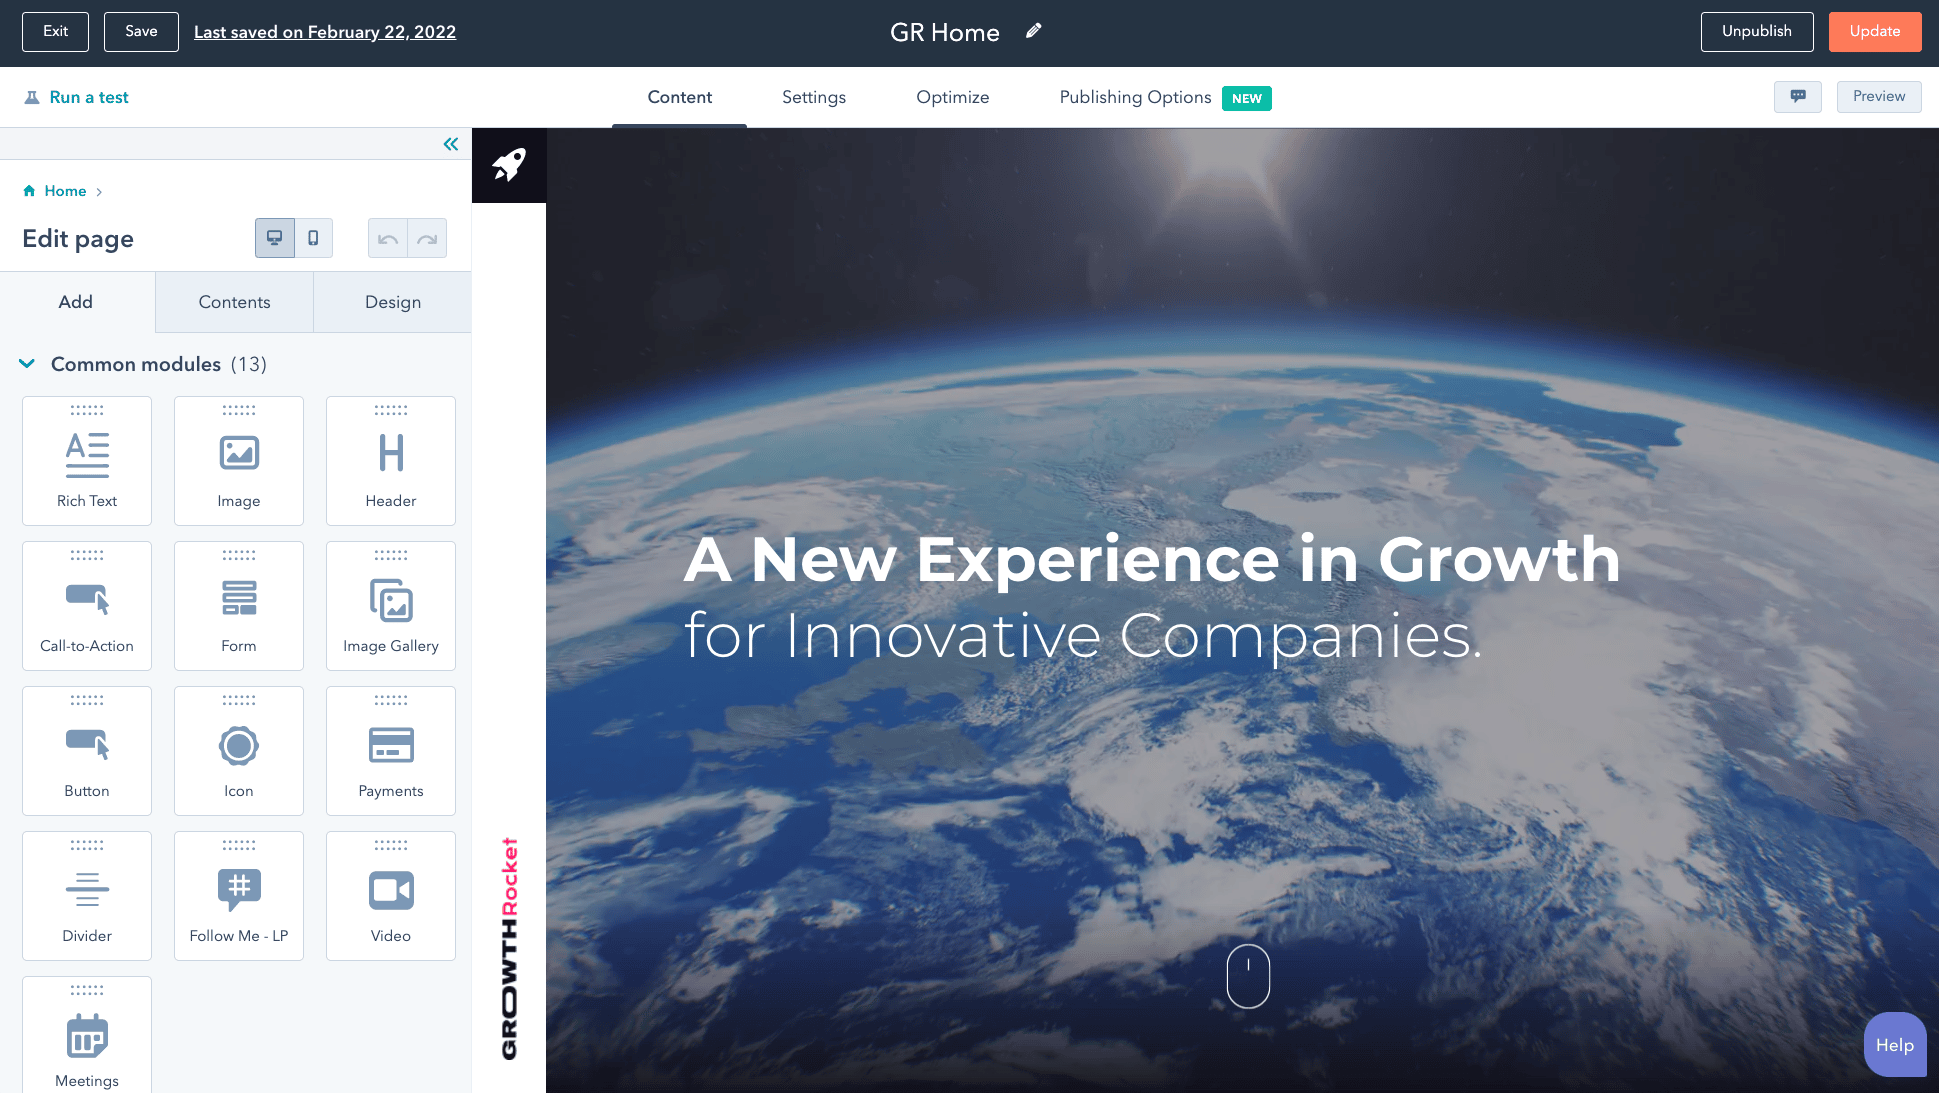 HubSpot website design platform